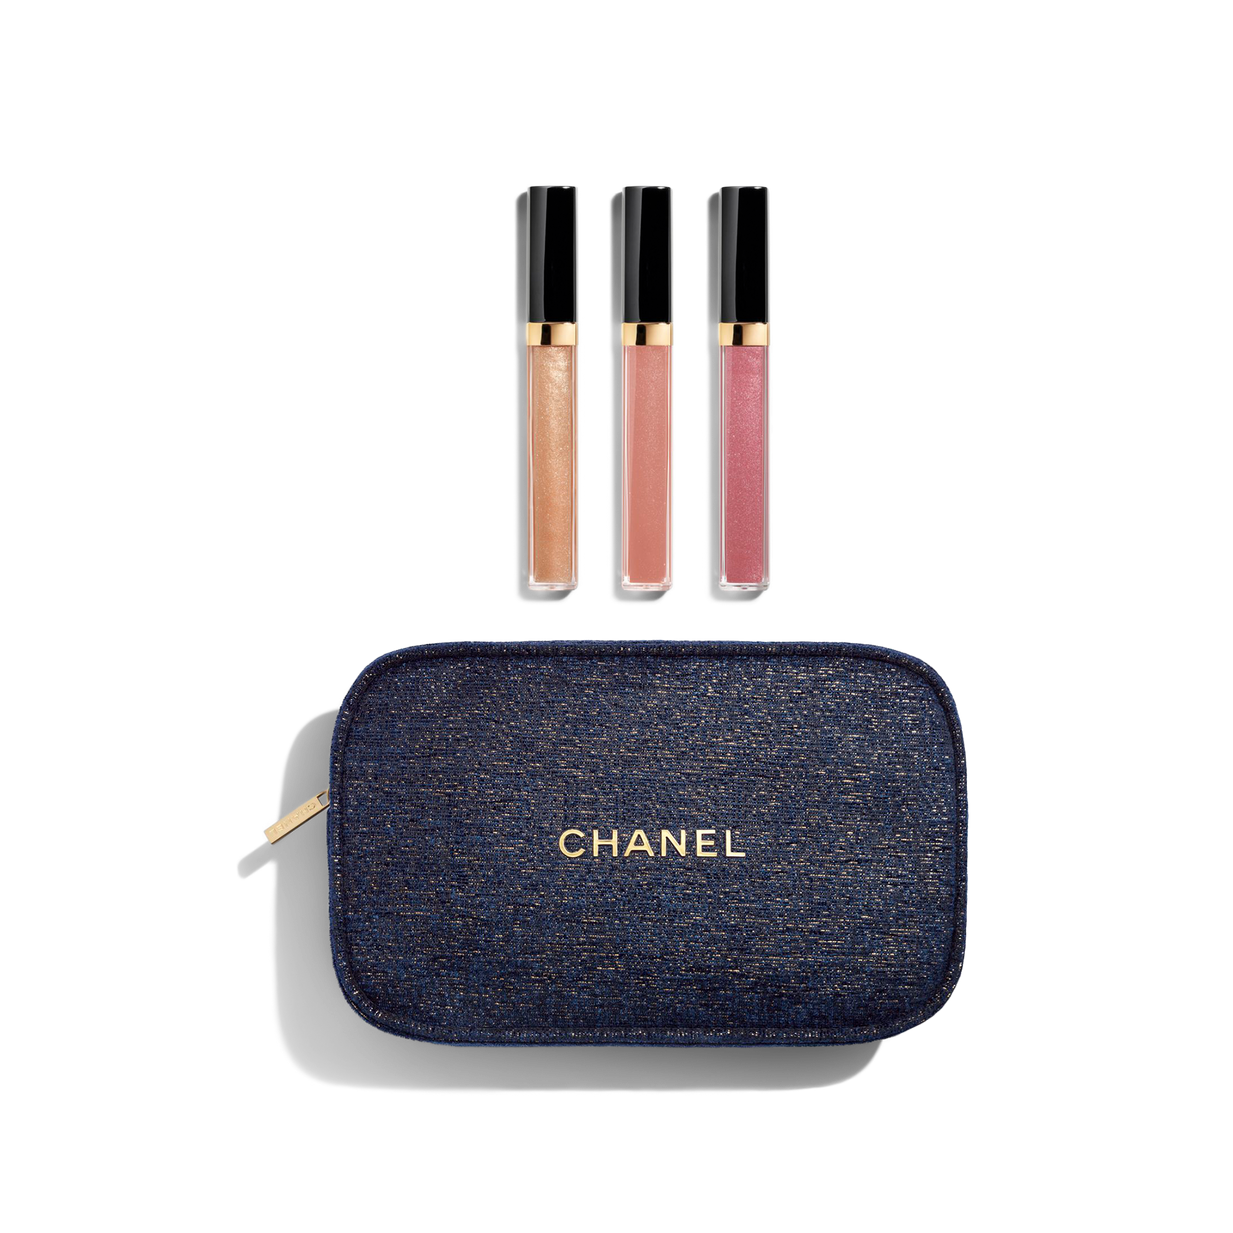 Chanel Sheer Genius Lip Gloss Kit Ingredients and Reviews